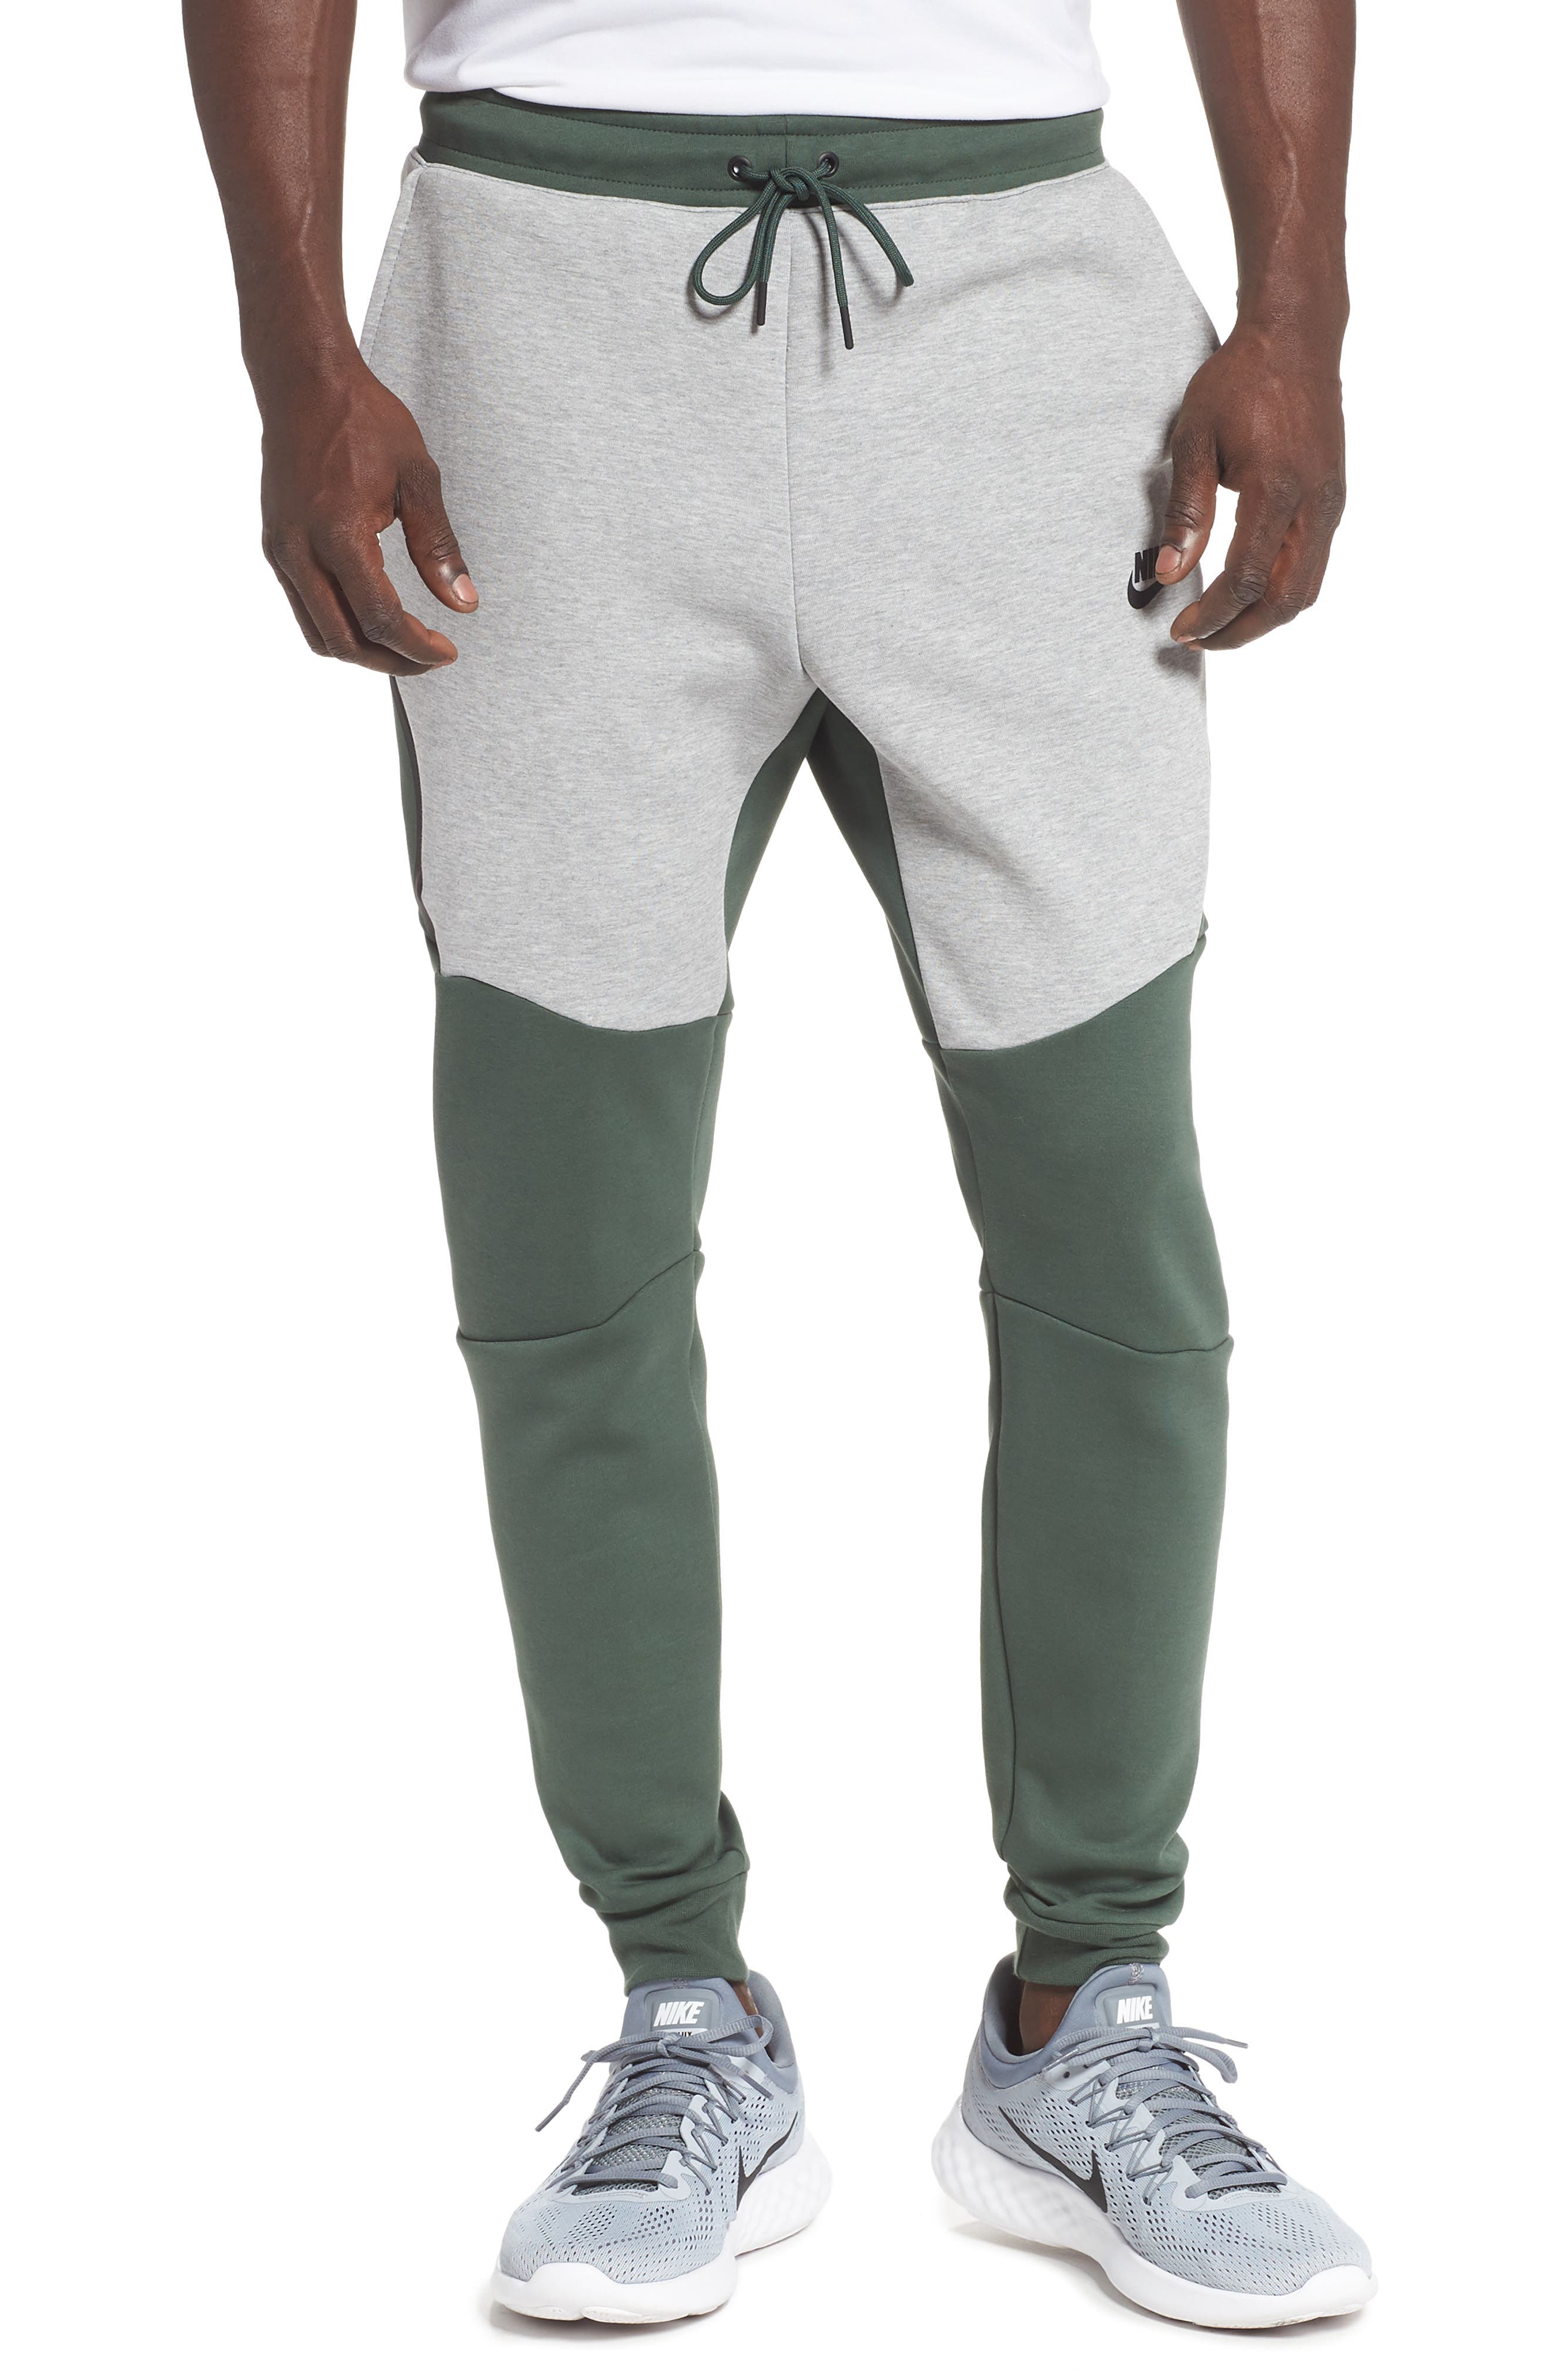 skinny fleece jogger pants